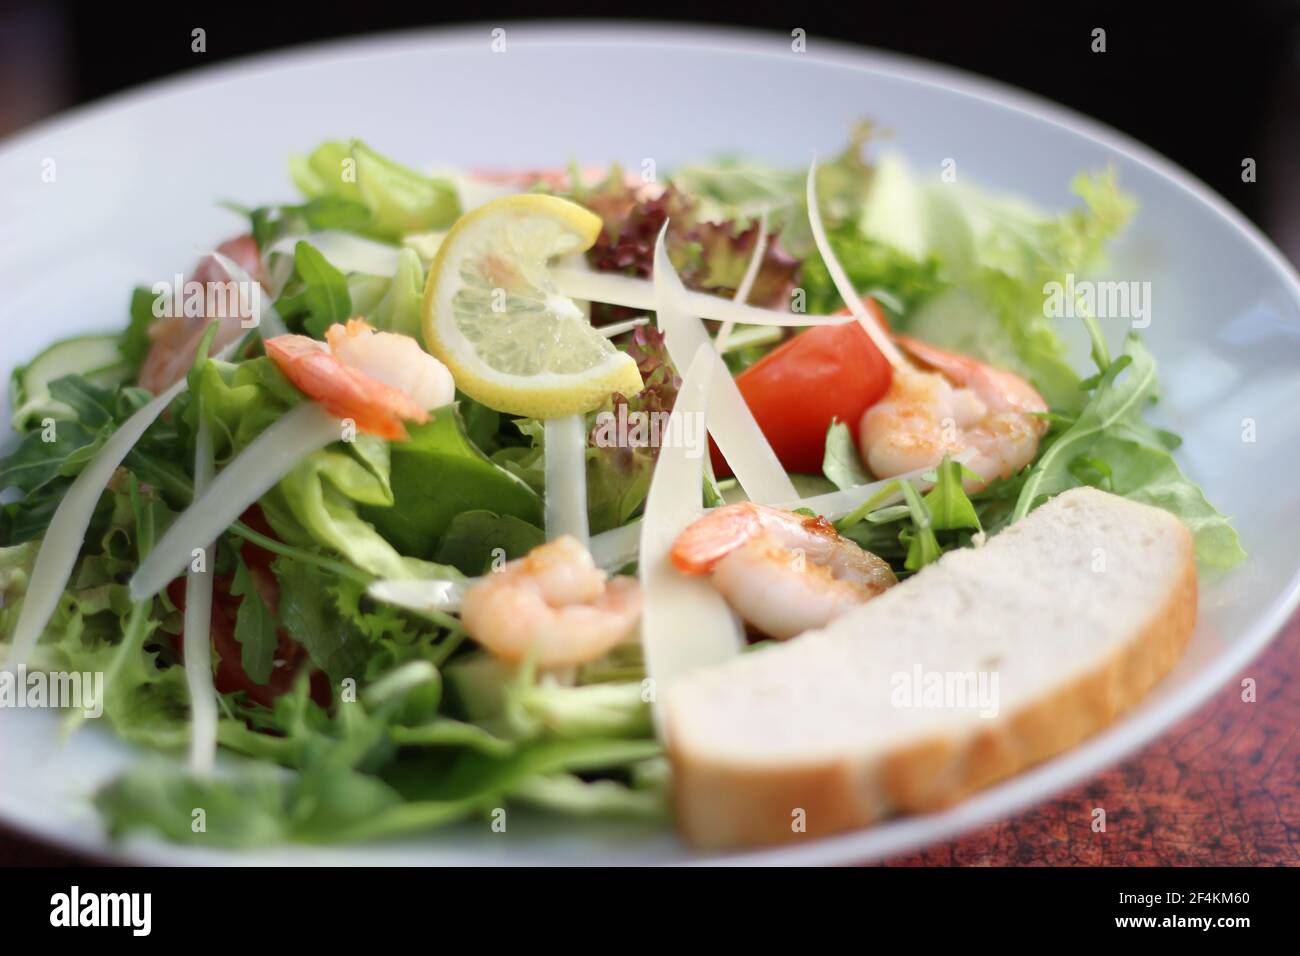 Restaurant food - salad with fresh ingredients Stock Photo